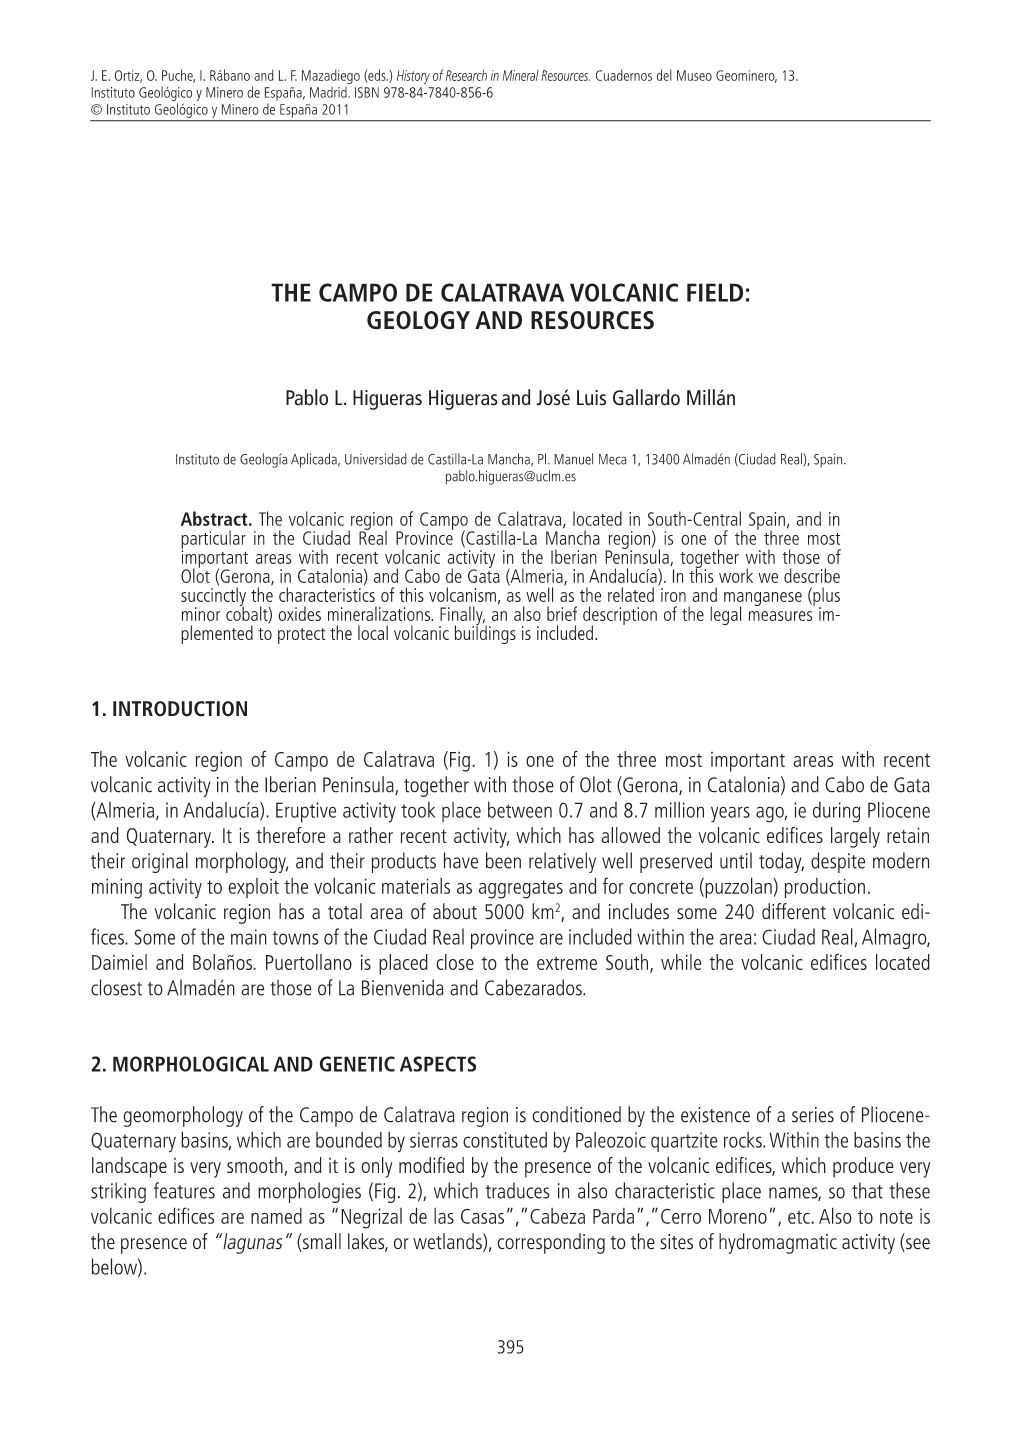 The Campo De Calatrava Volcanic Field: Geology and Resources